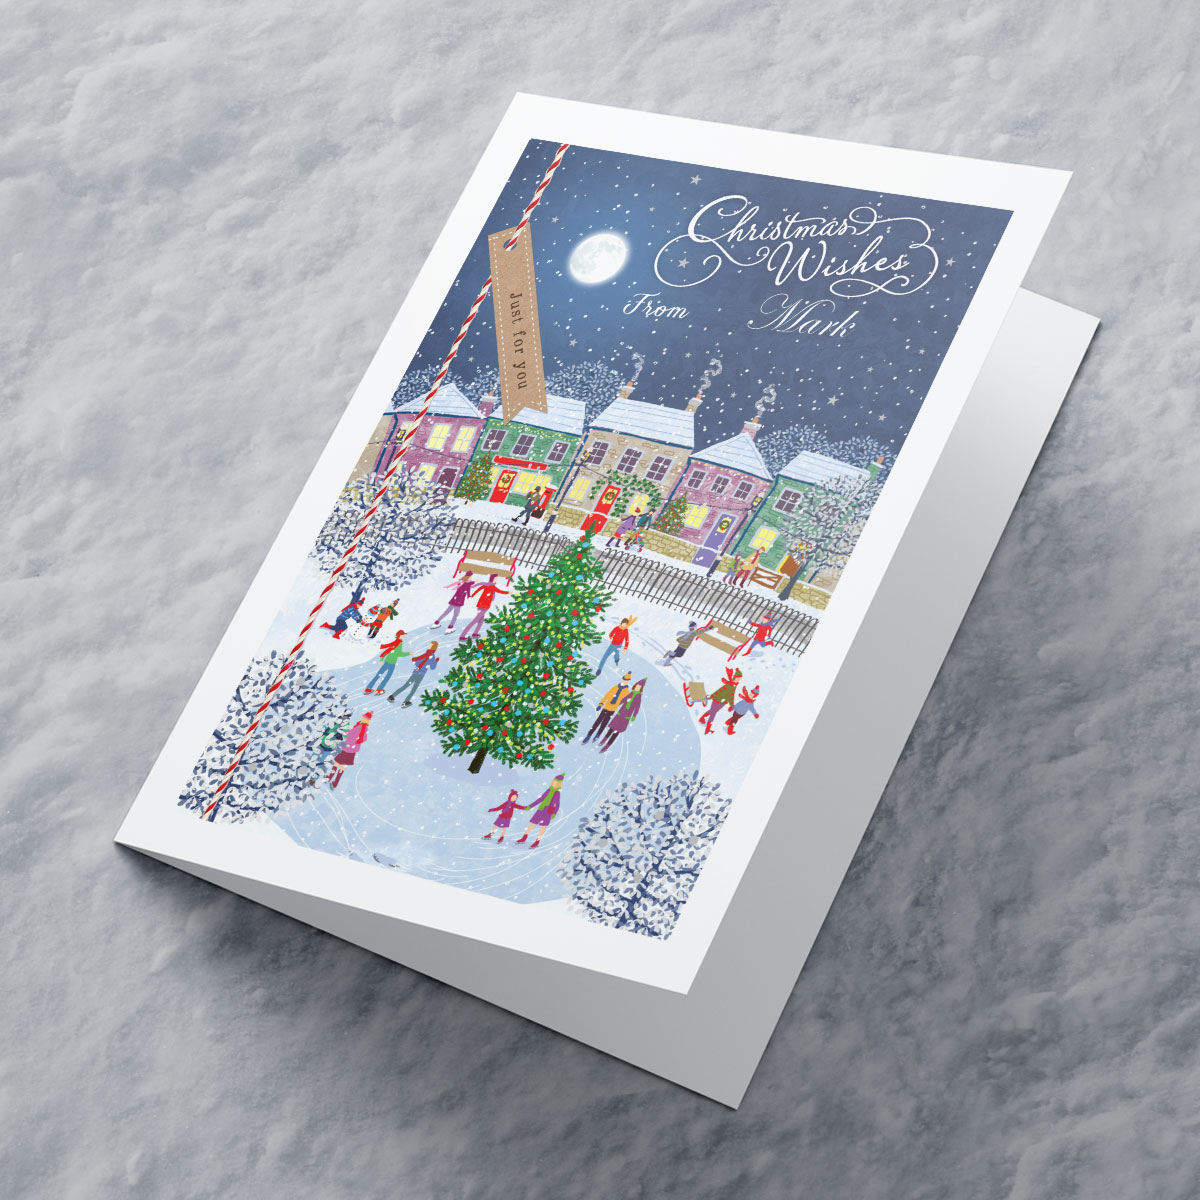 Personalised Christmas Card - Ice Skating Scene